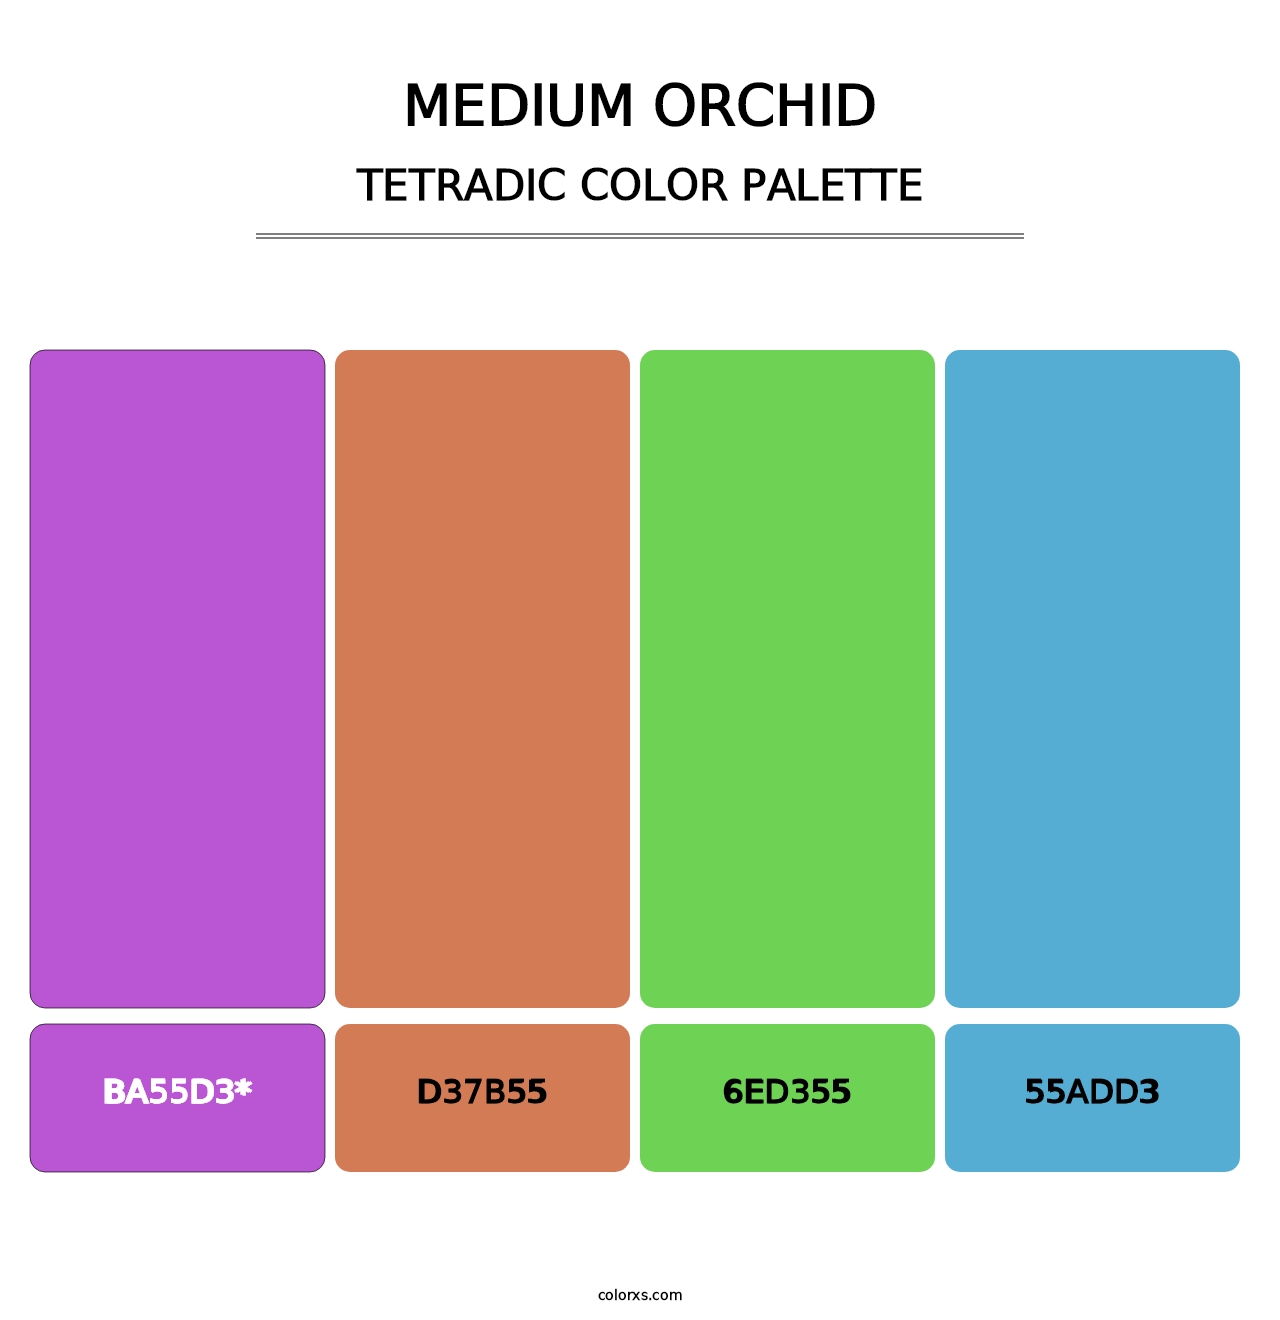 Medium Orchid - Tetradic Color Palette